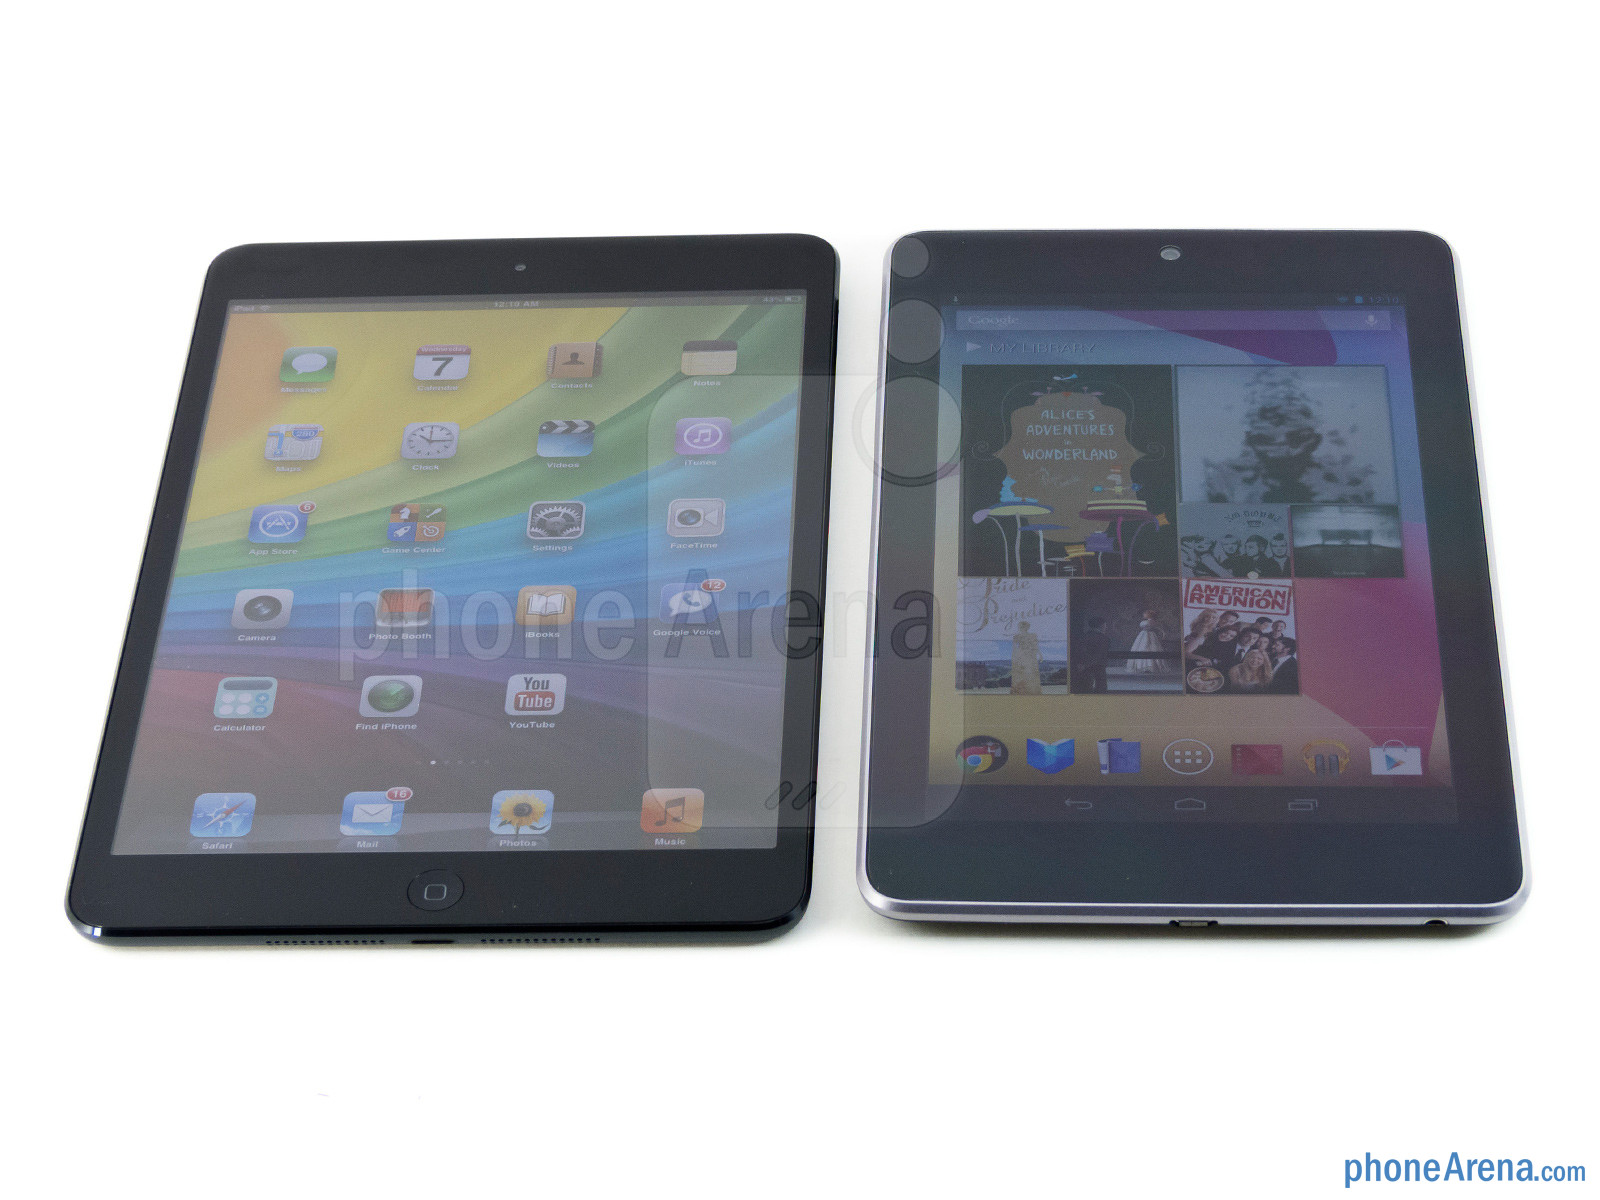 So sánh Apple iPad mini và Google Nexus 7 2